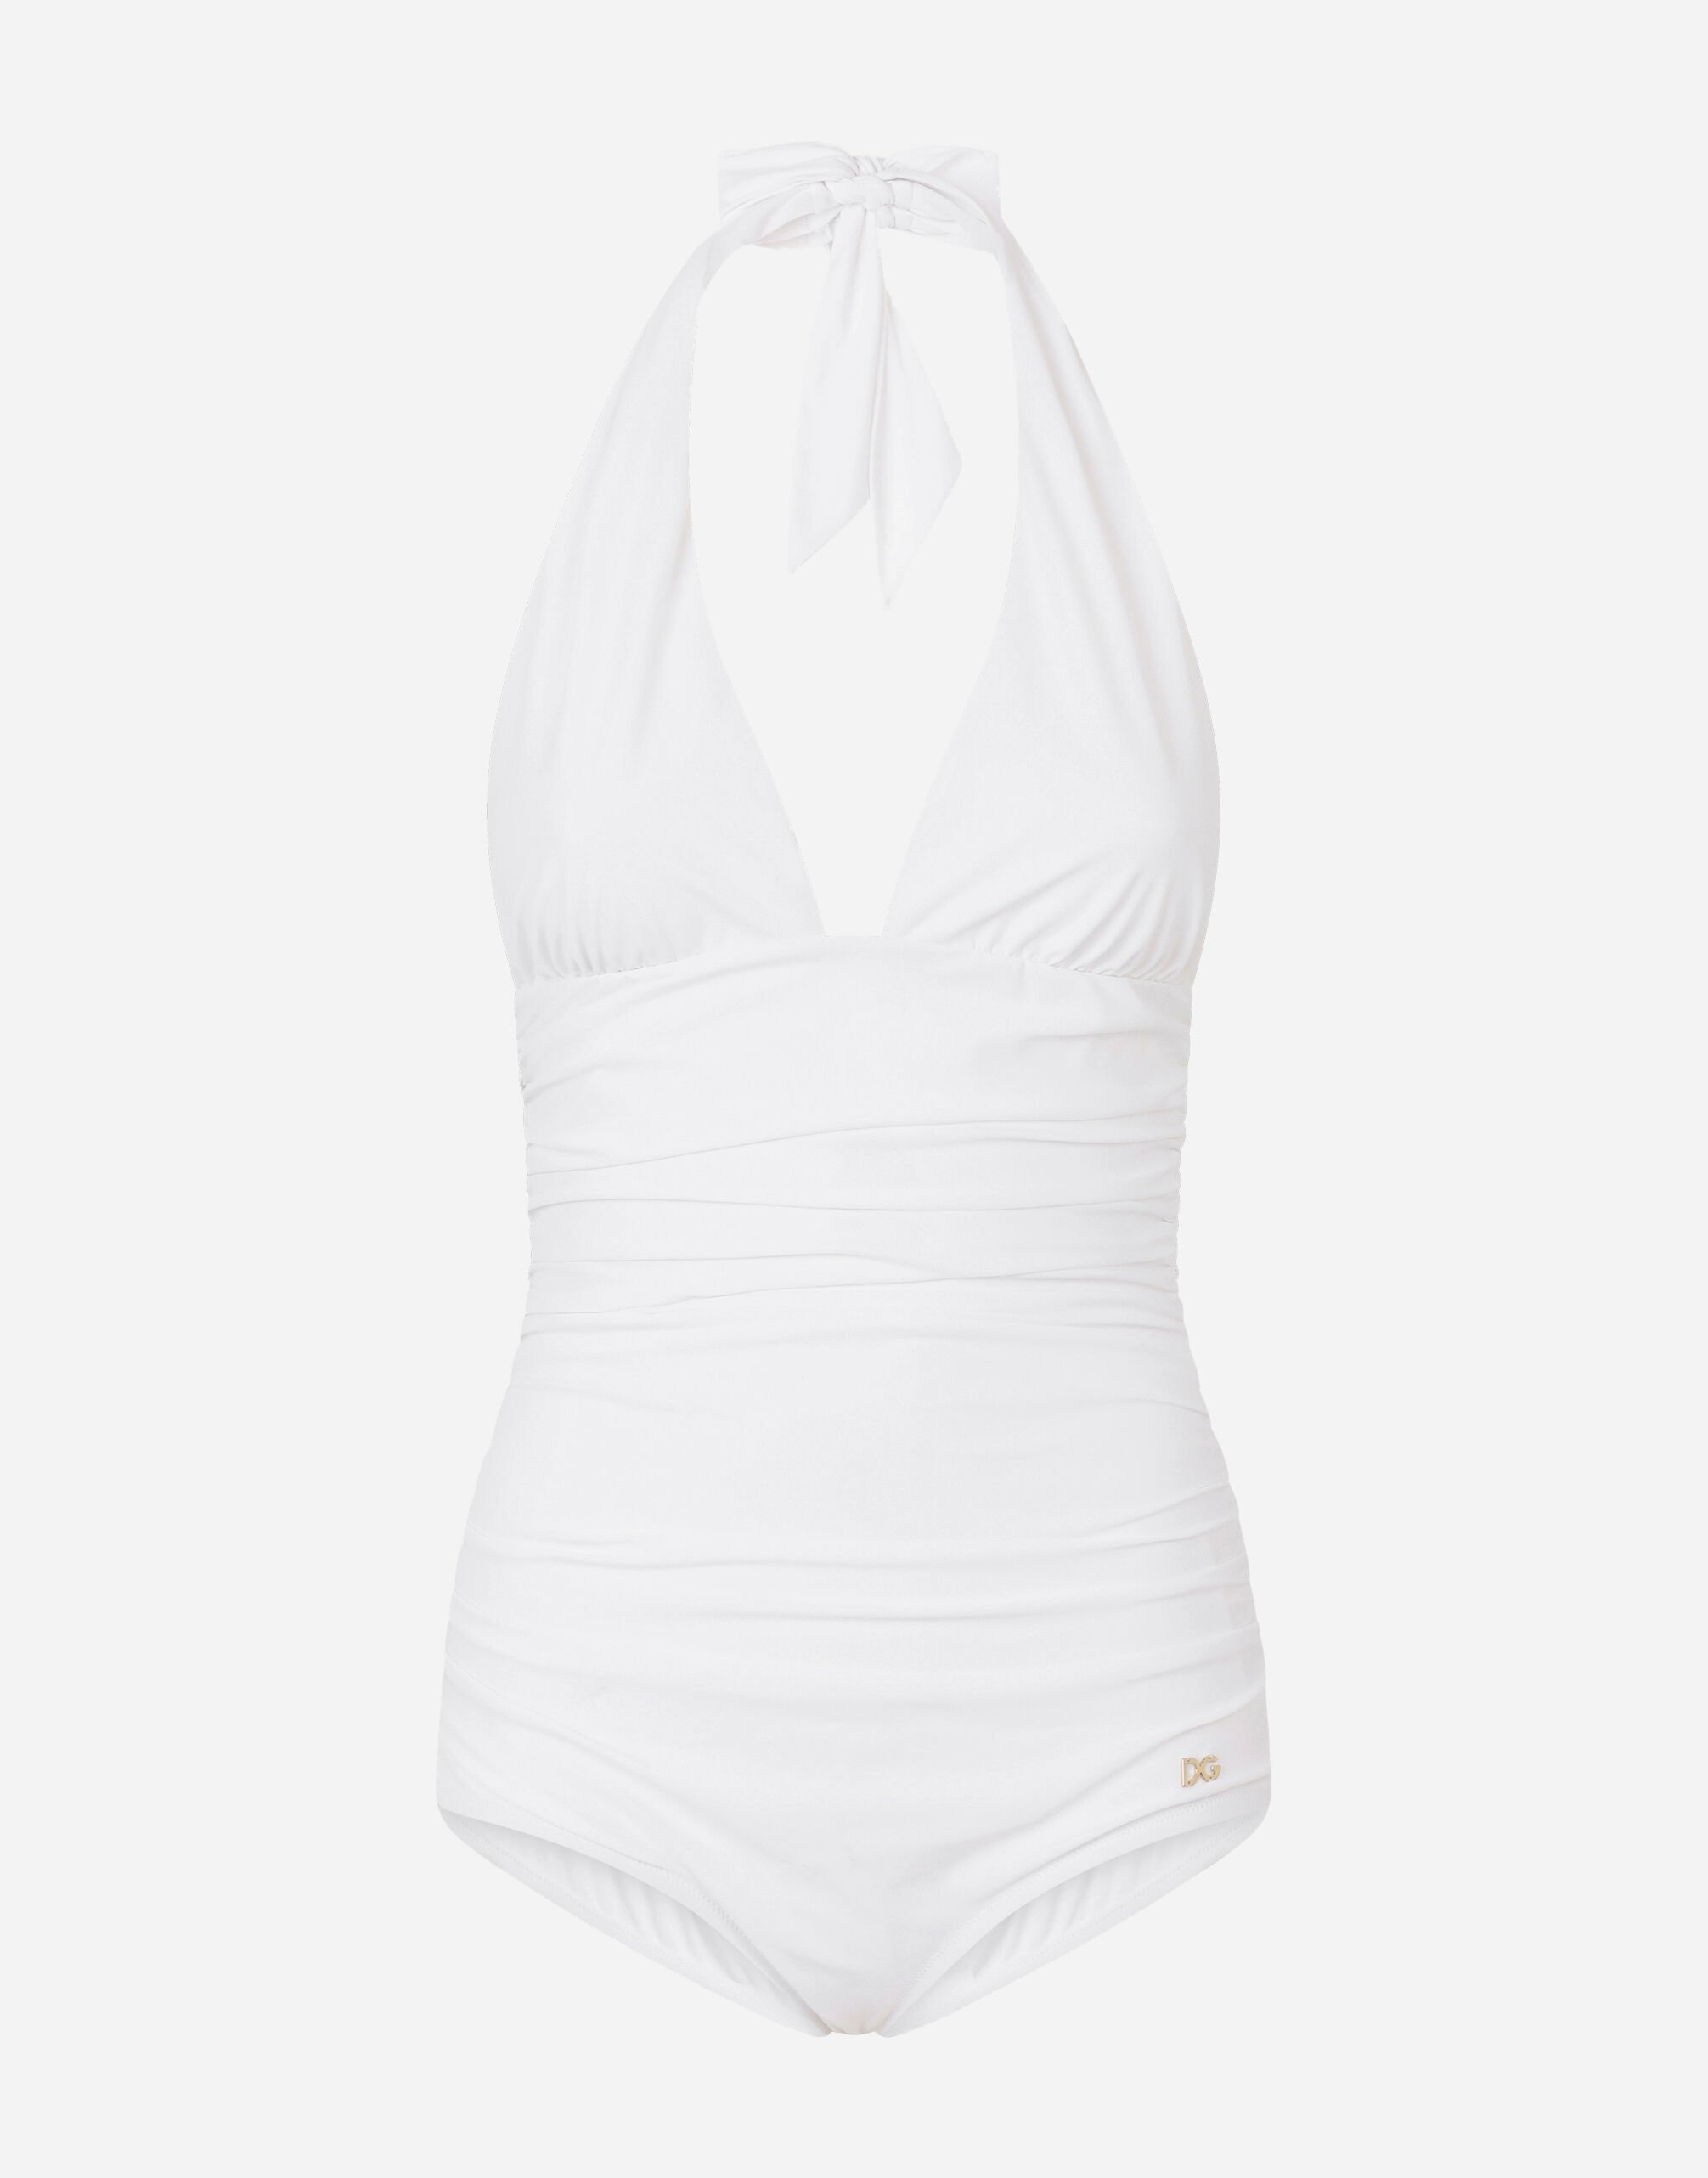 Dolce & Gabbana One-piece swimsuit with plunging neckline Print O8C18JFSG8C